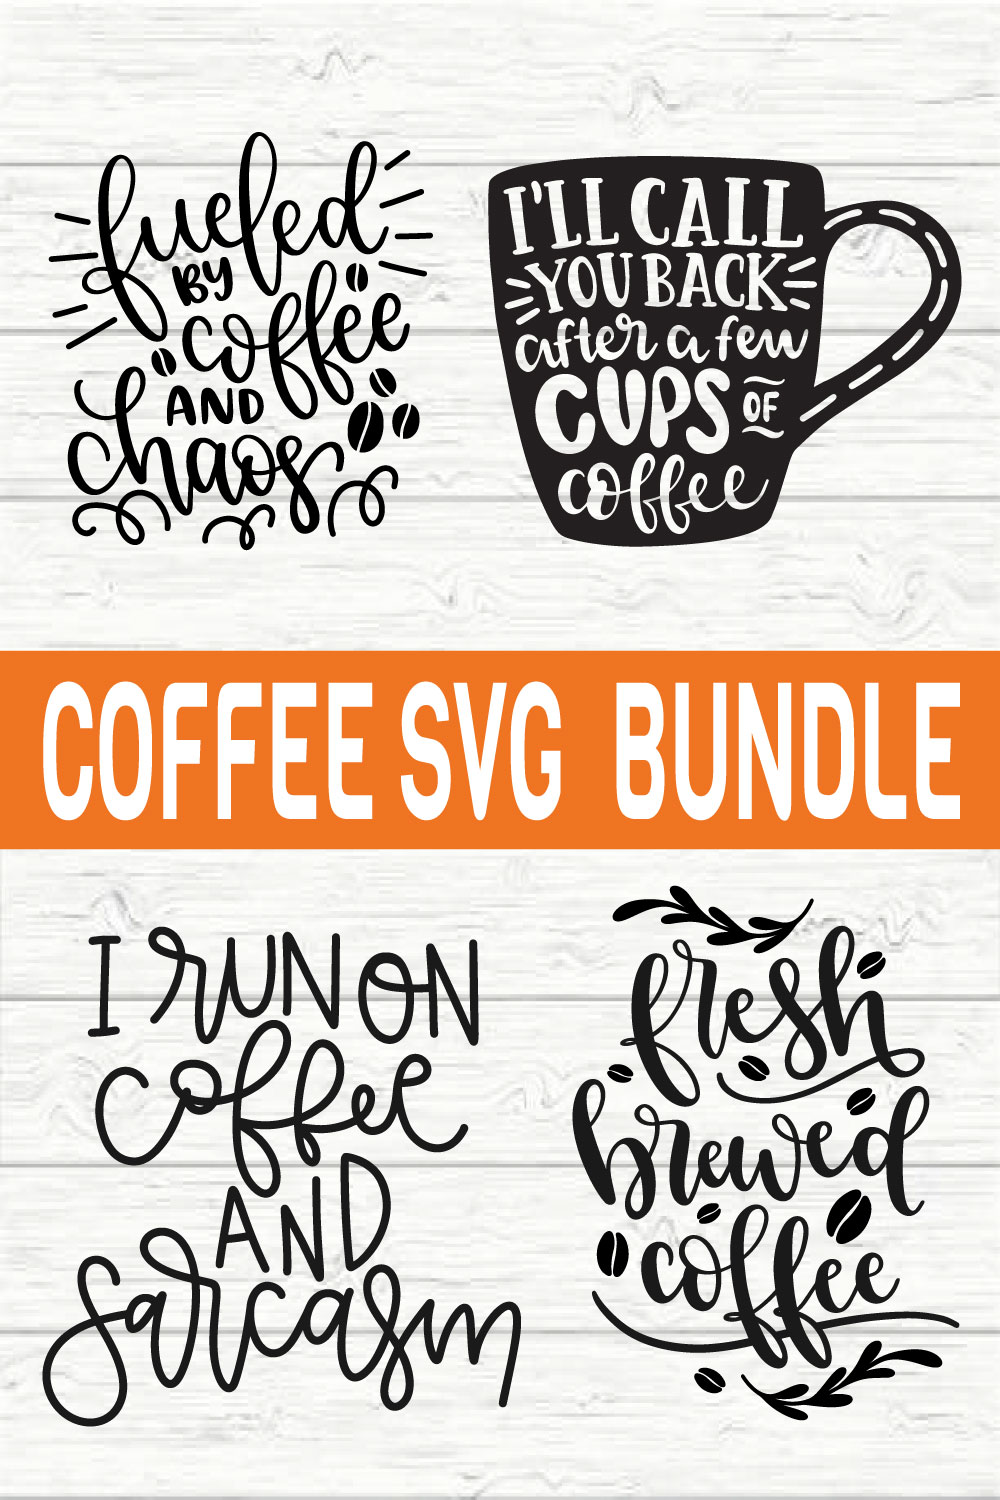 Coffee Svg Bundle vol2 pinterest preview image.